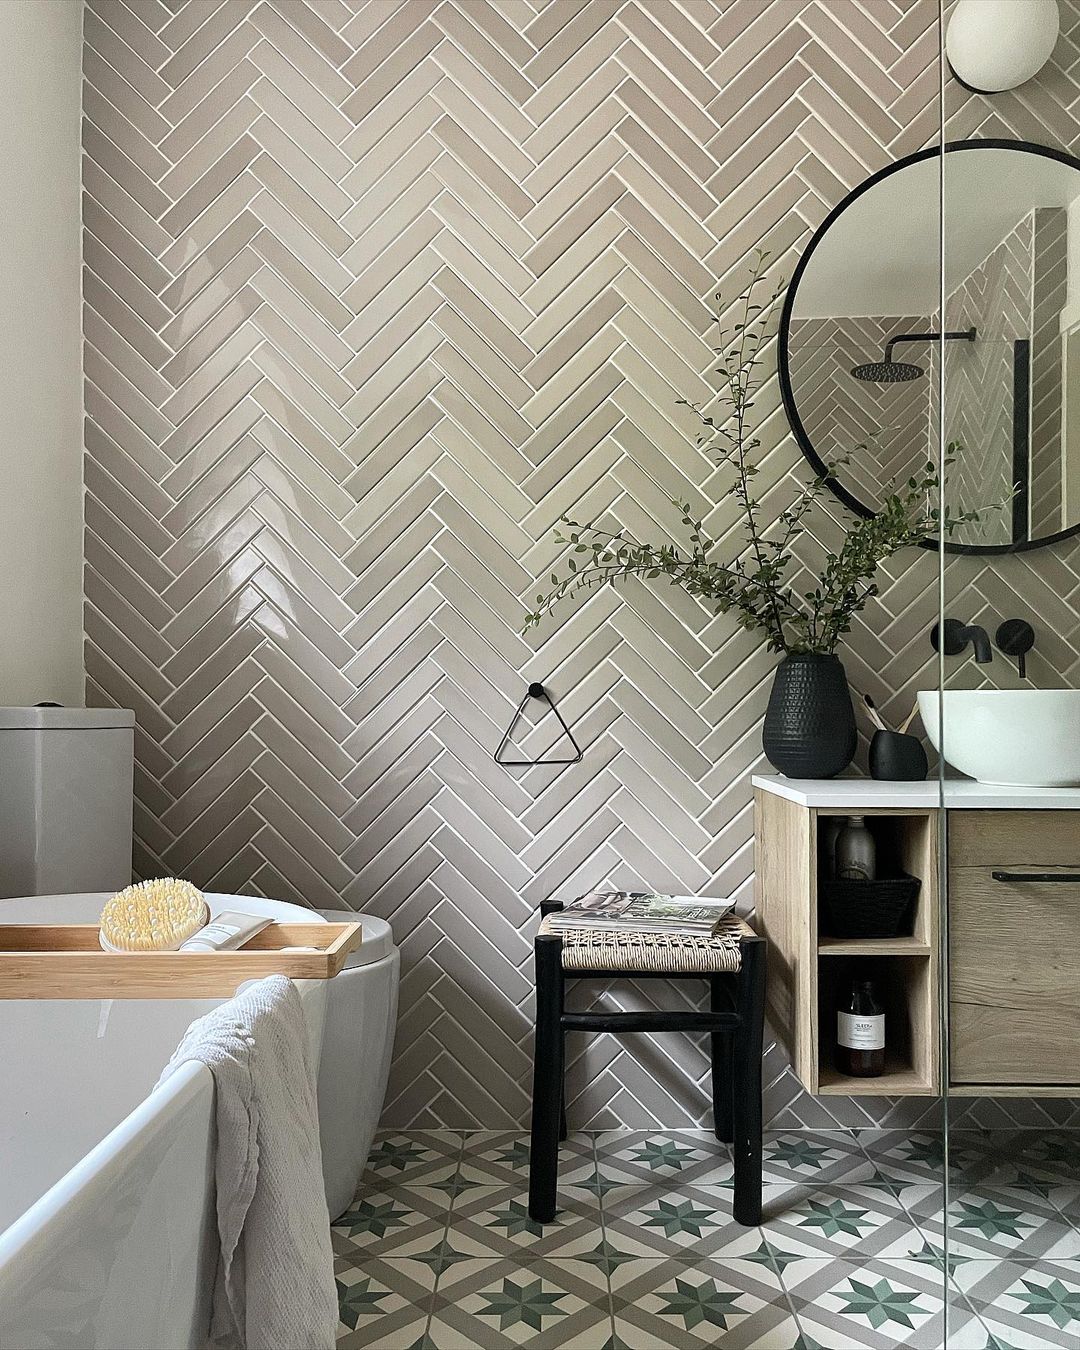 Modern Bathroom Using Geometric Design. Photo by Instagram user @mishkashoe